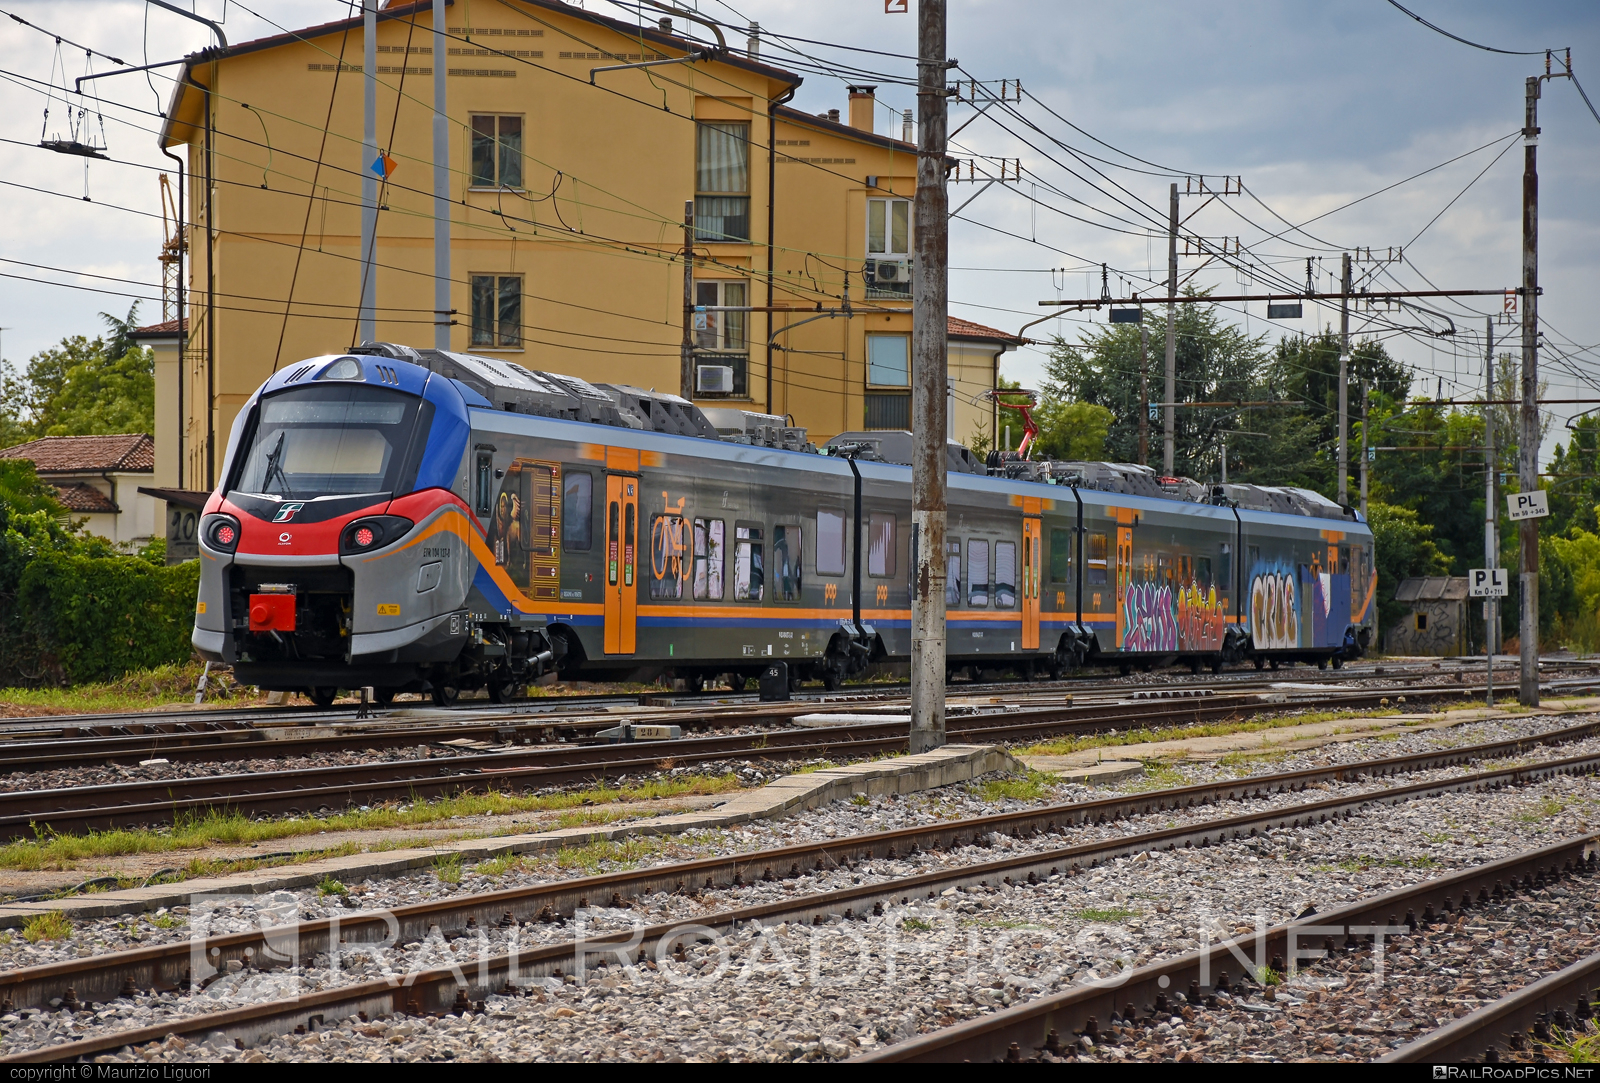 Alstom Coradia Stream ”Pop” - ETR 104 127-B operated by Trenitalia S.p.A. #alstom #alstomCoradia #coradia #coradiaStream #coradiaStreamPop #ferroviedellostato #fs #fsitaliane #graffiti #pop #trenitalia #trenitaliaspa